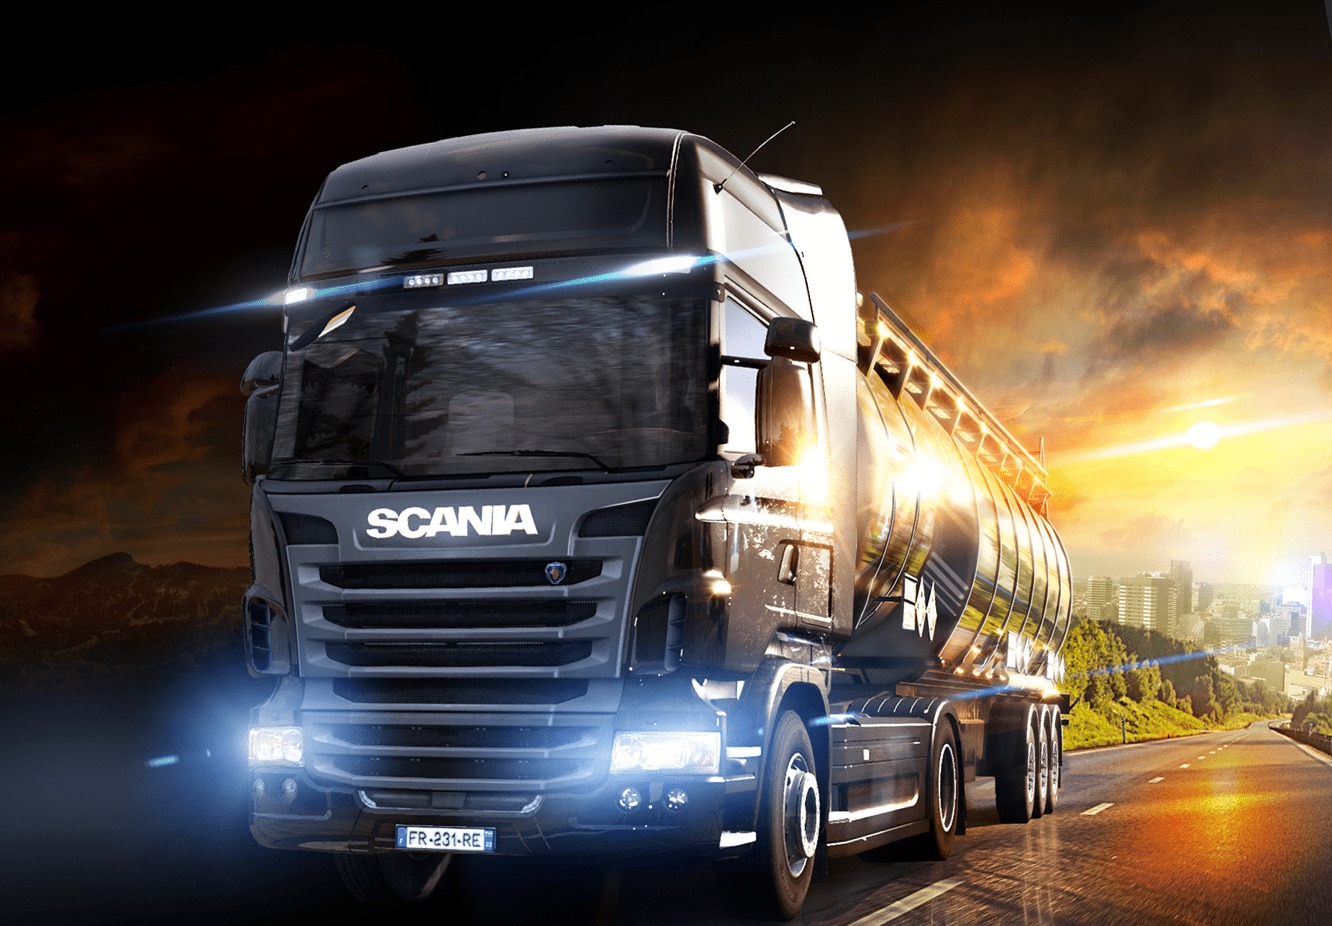 Euro Truck Simulator 2 Italia DLC kaufen - Online Gold